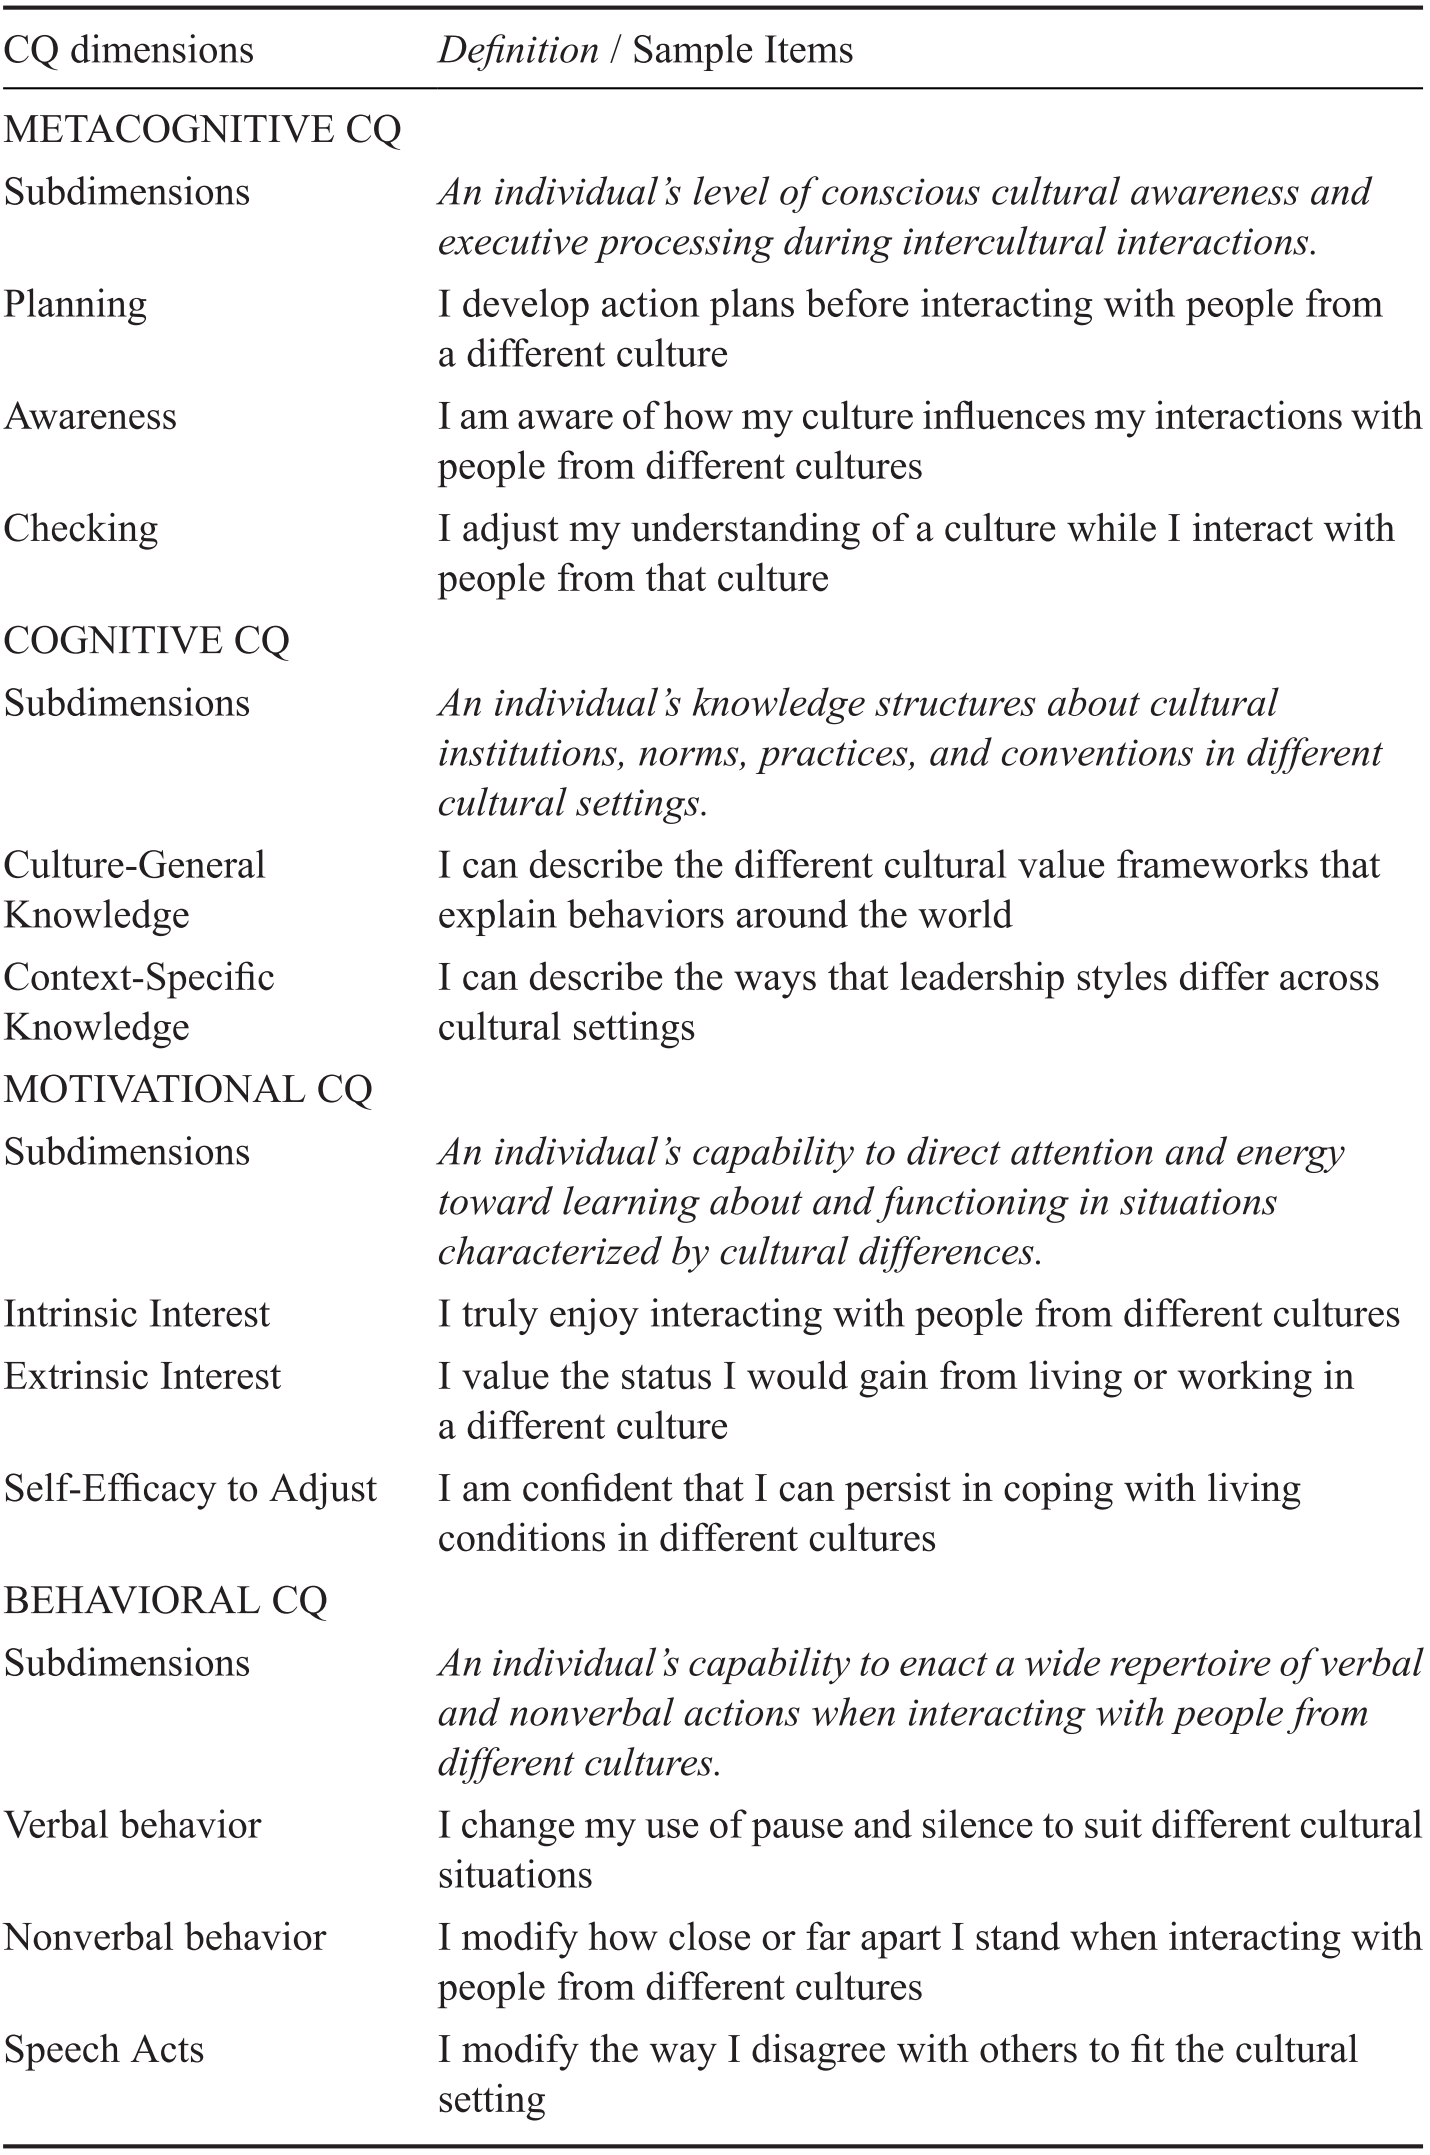 Kinds Of Intelligence Part Vi The Cambridge Handbook Of